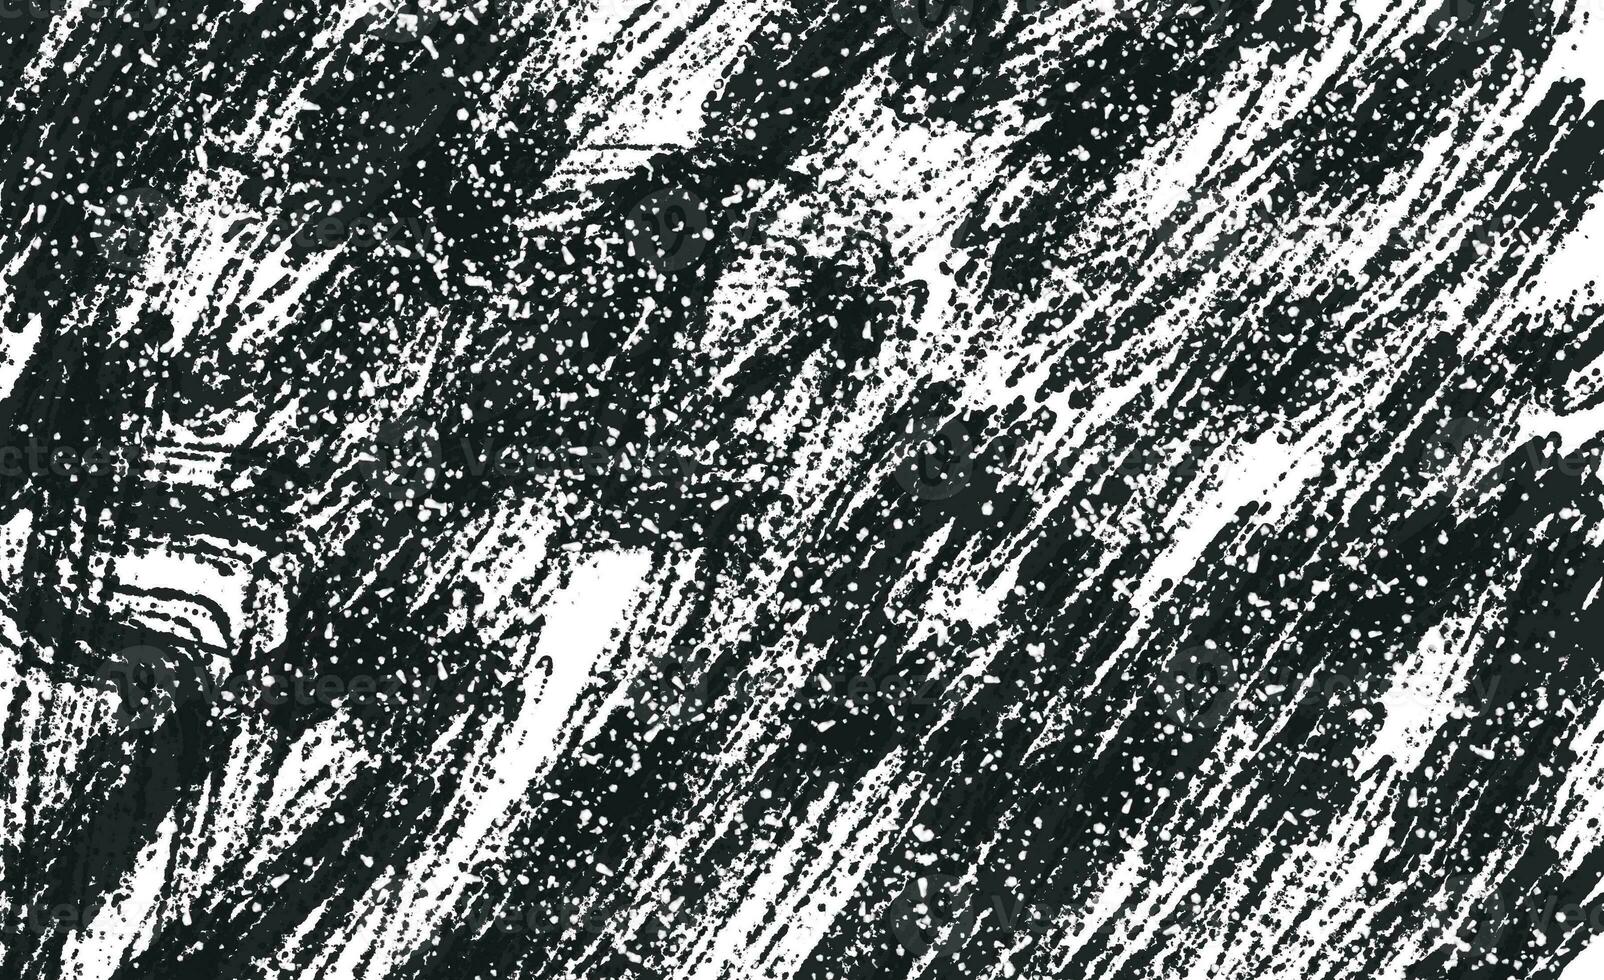 scratch grunge urbain background.grunge texture de détresse noir et blanc.grunge rugueux fond sale photo